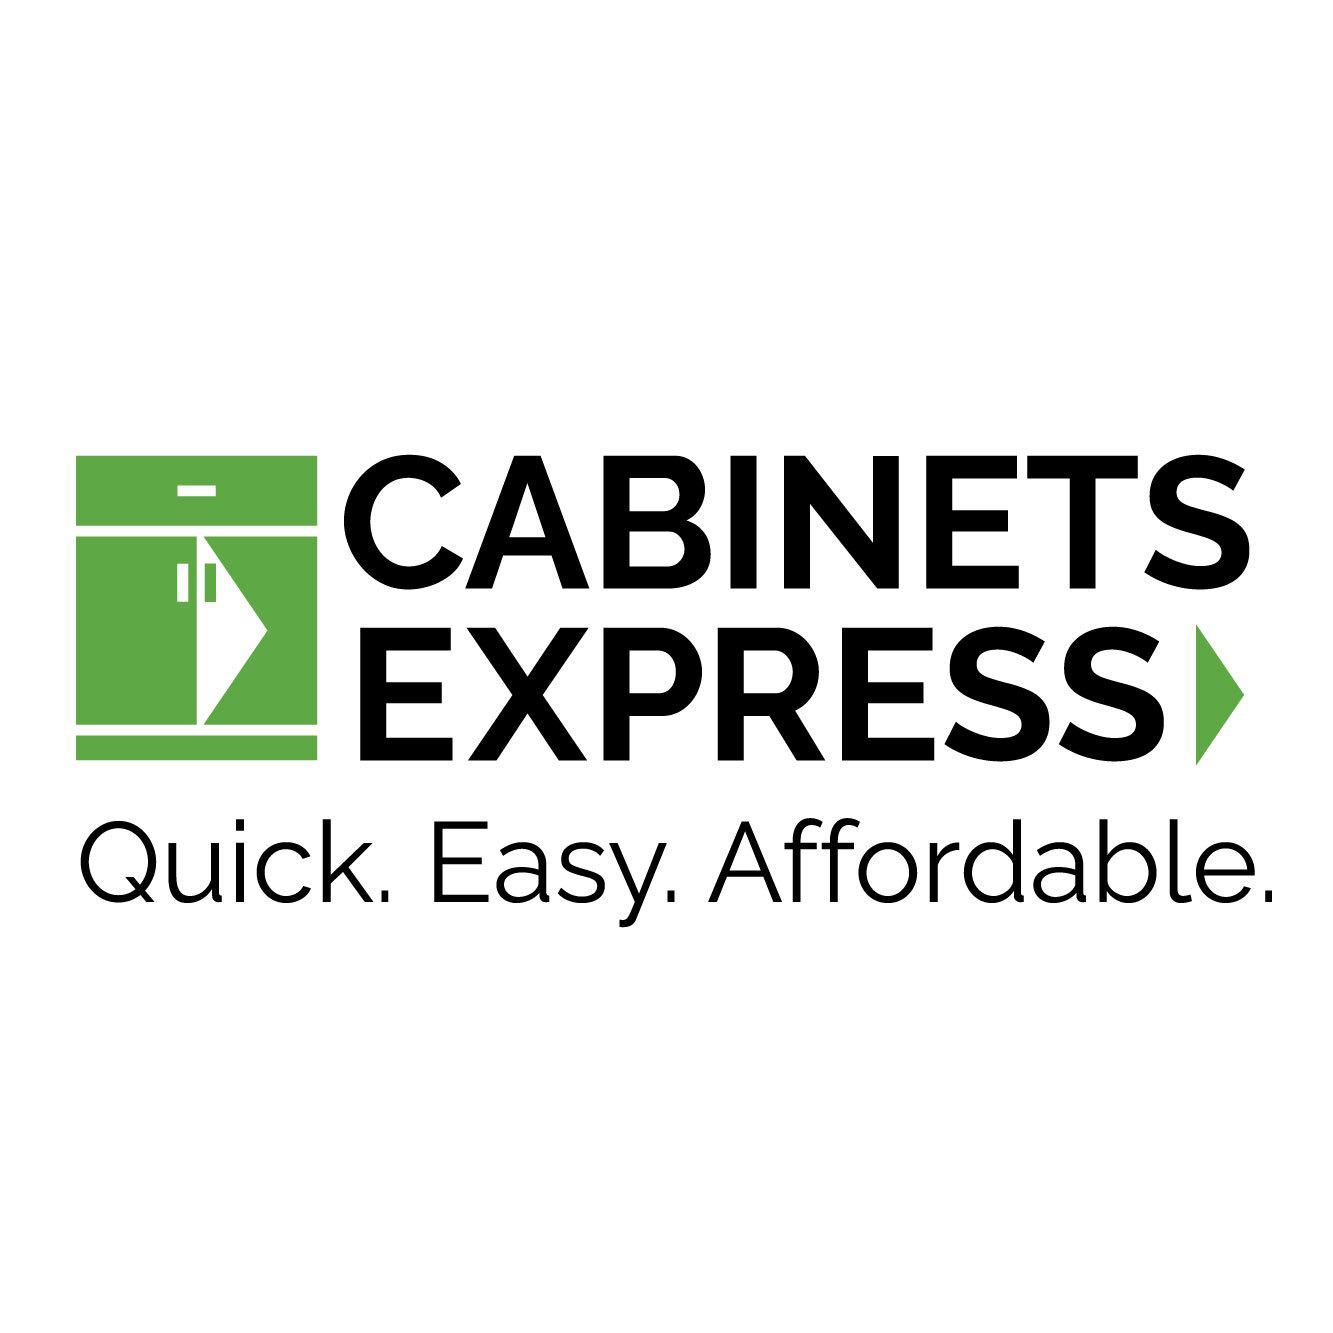 Cabinets Express - Byron Center, MI 49315 - (616)358-9200 | ShowMeLocal.com